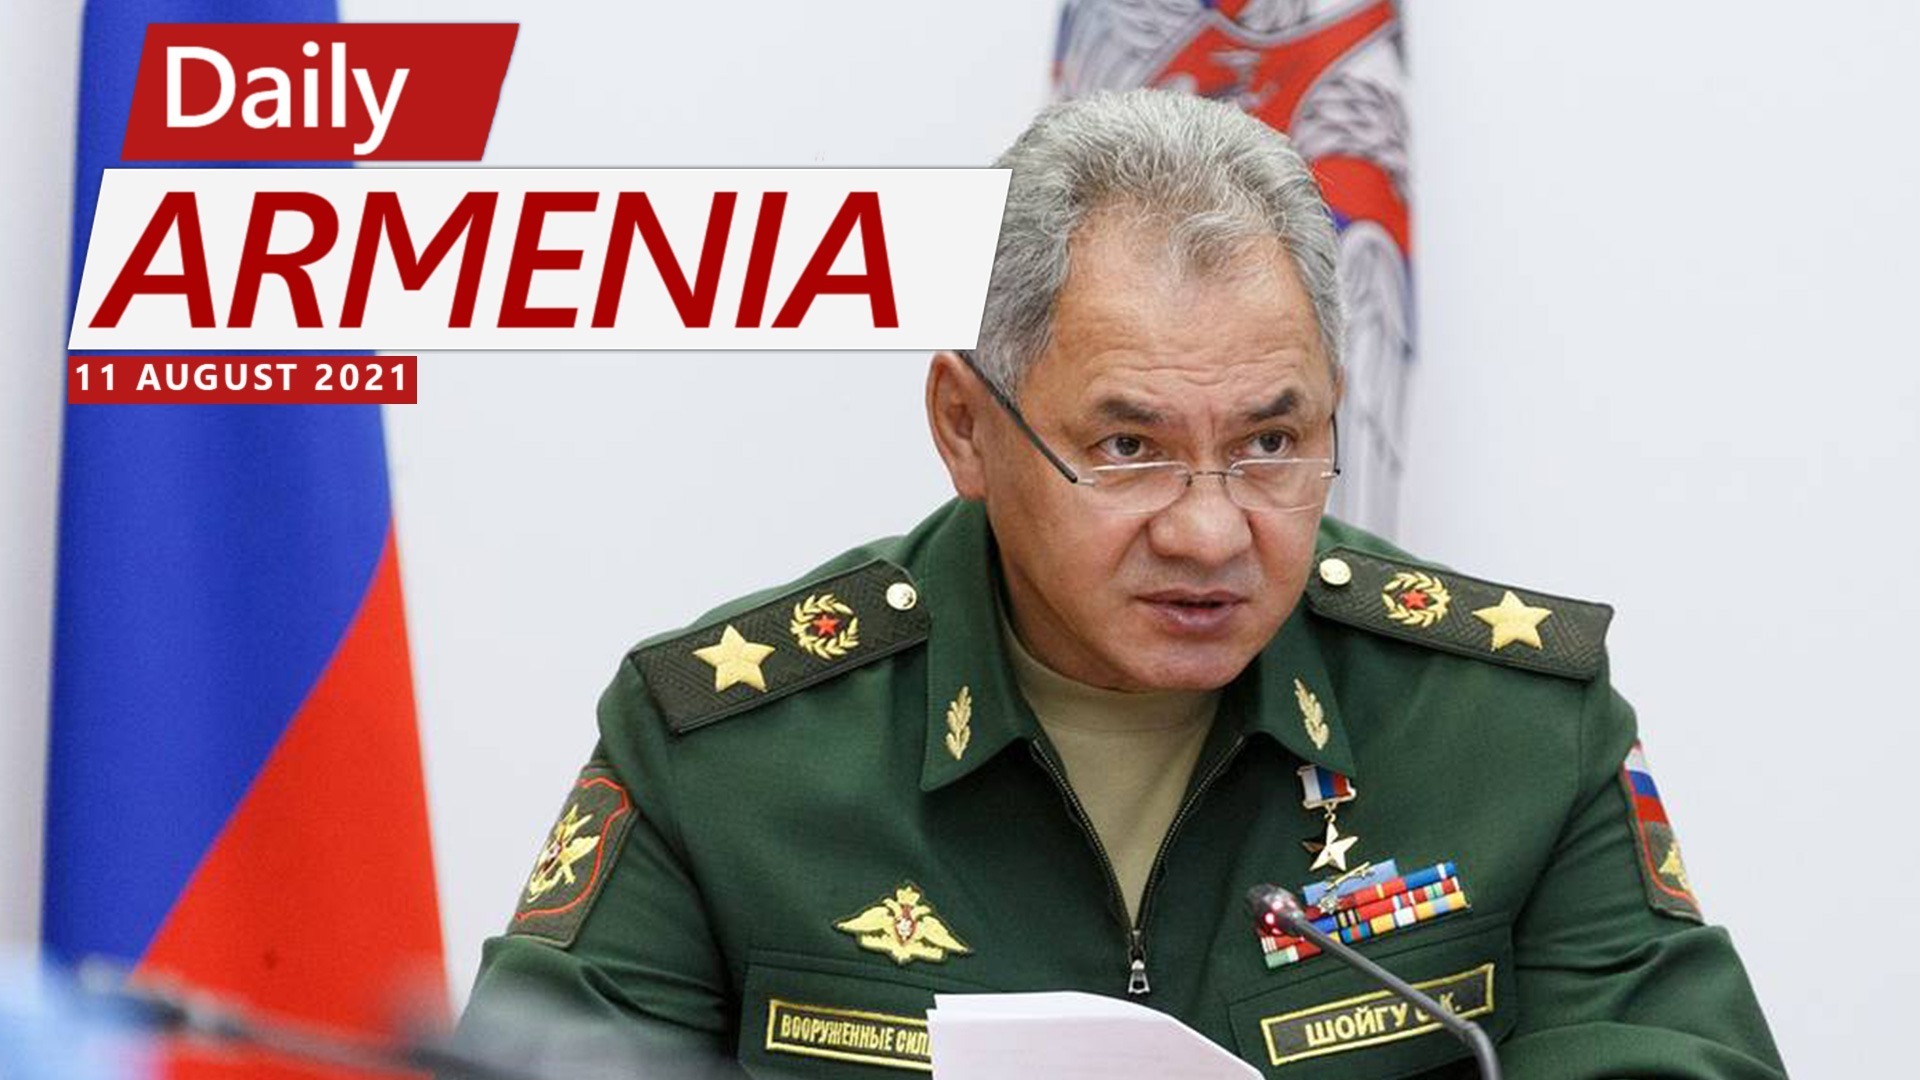 Russia says its ready to help Armenia modernize its military